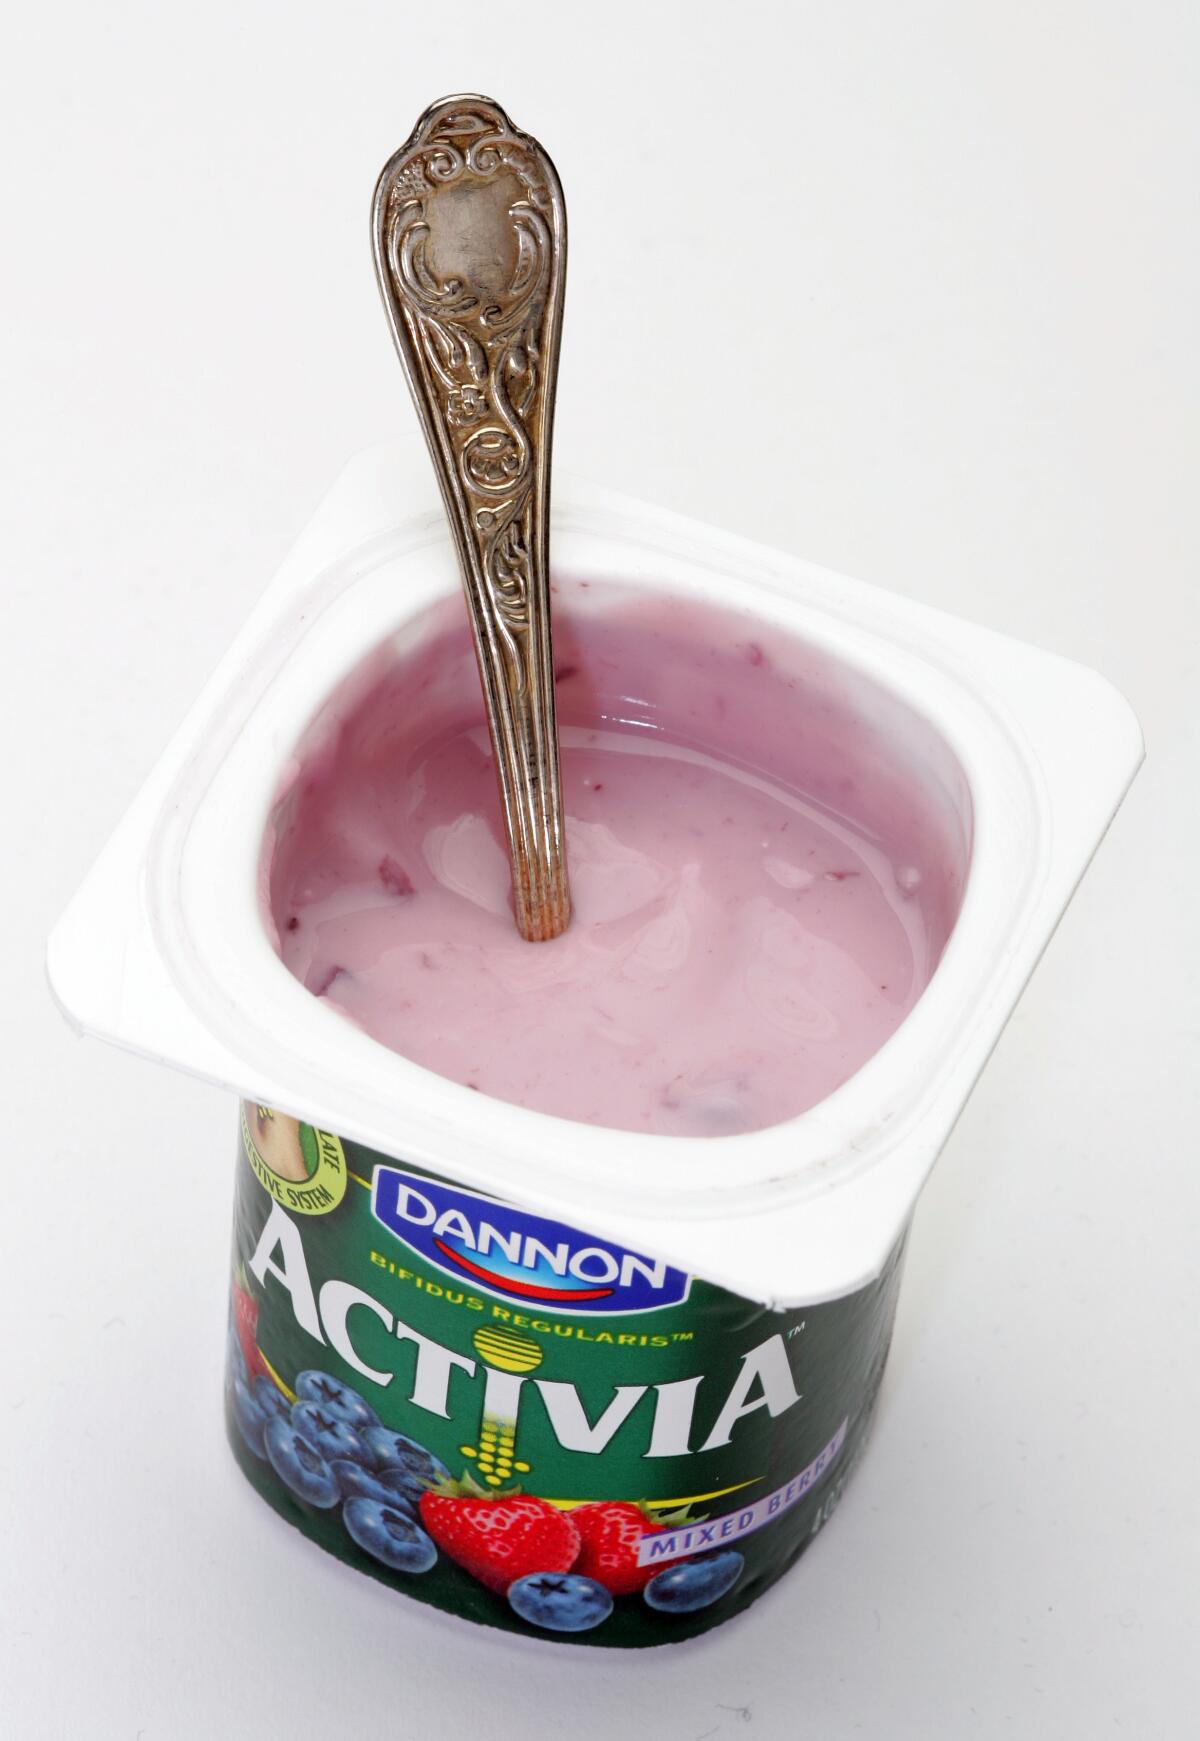 Dannon Activia yogurt.